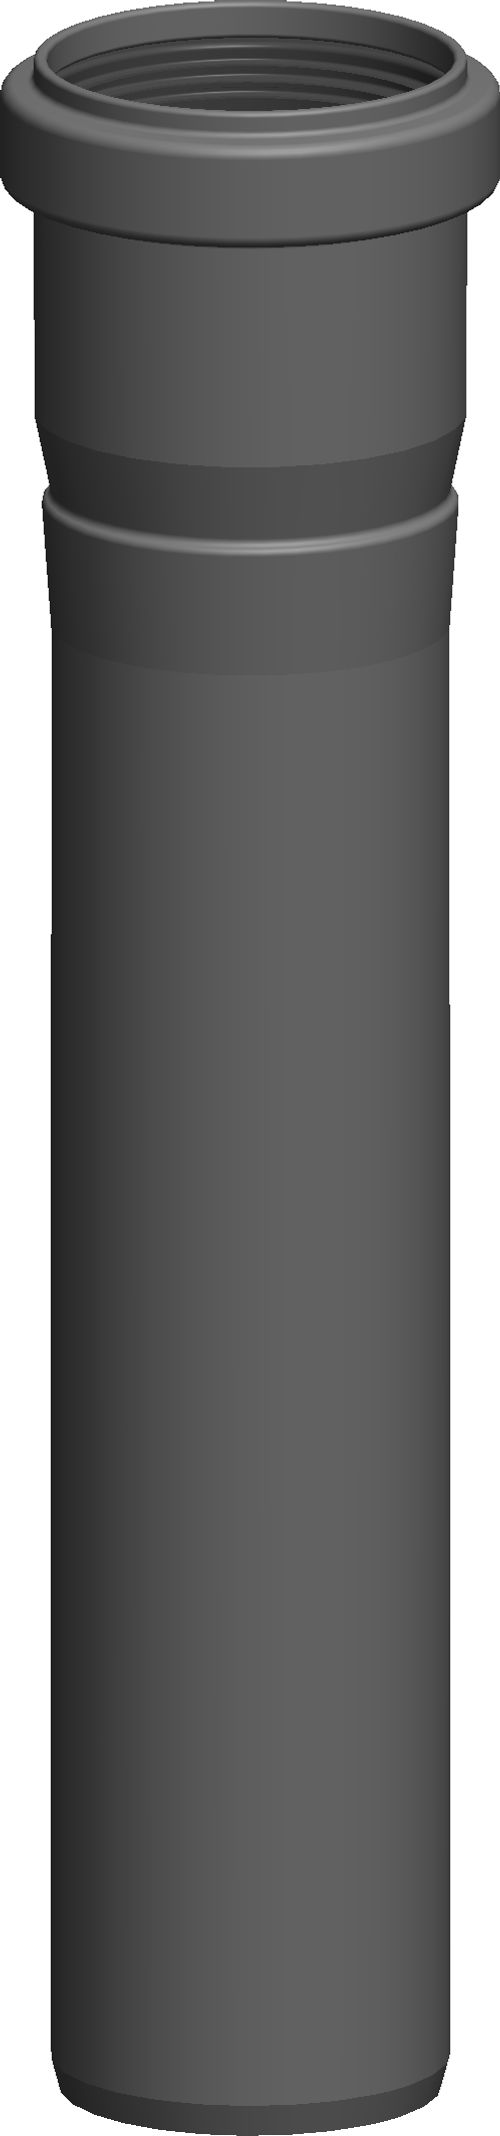 ATEC-Rohr-255mm-DN-60-kuerzbar-einwandig-0317